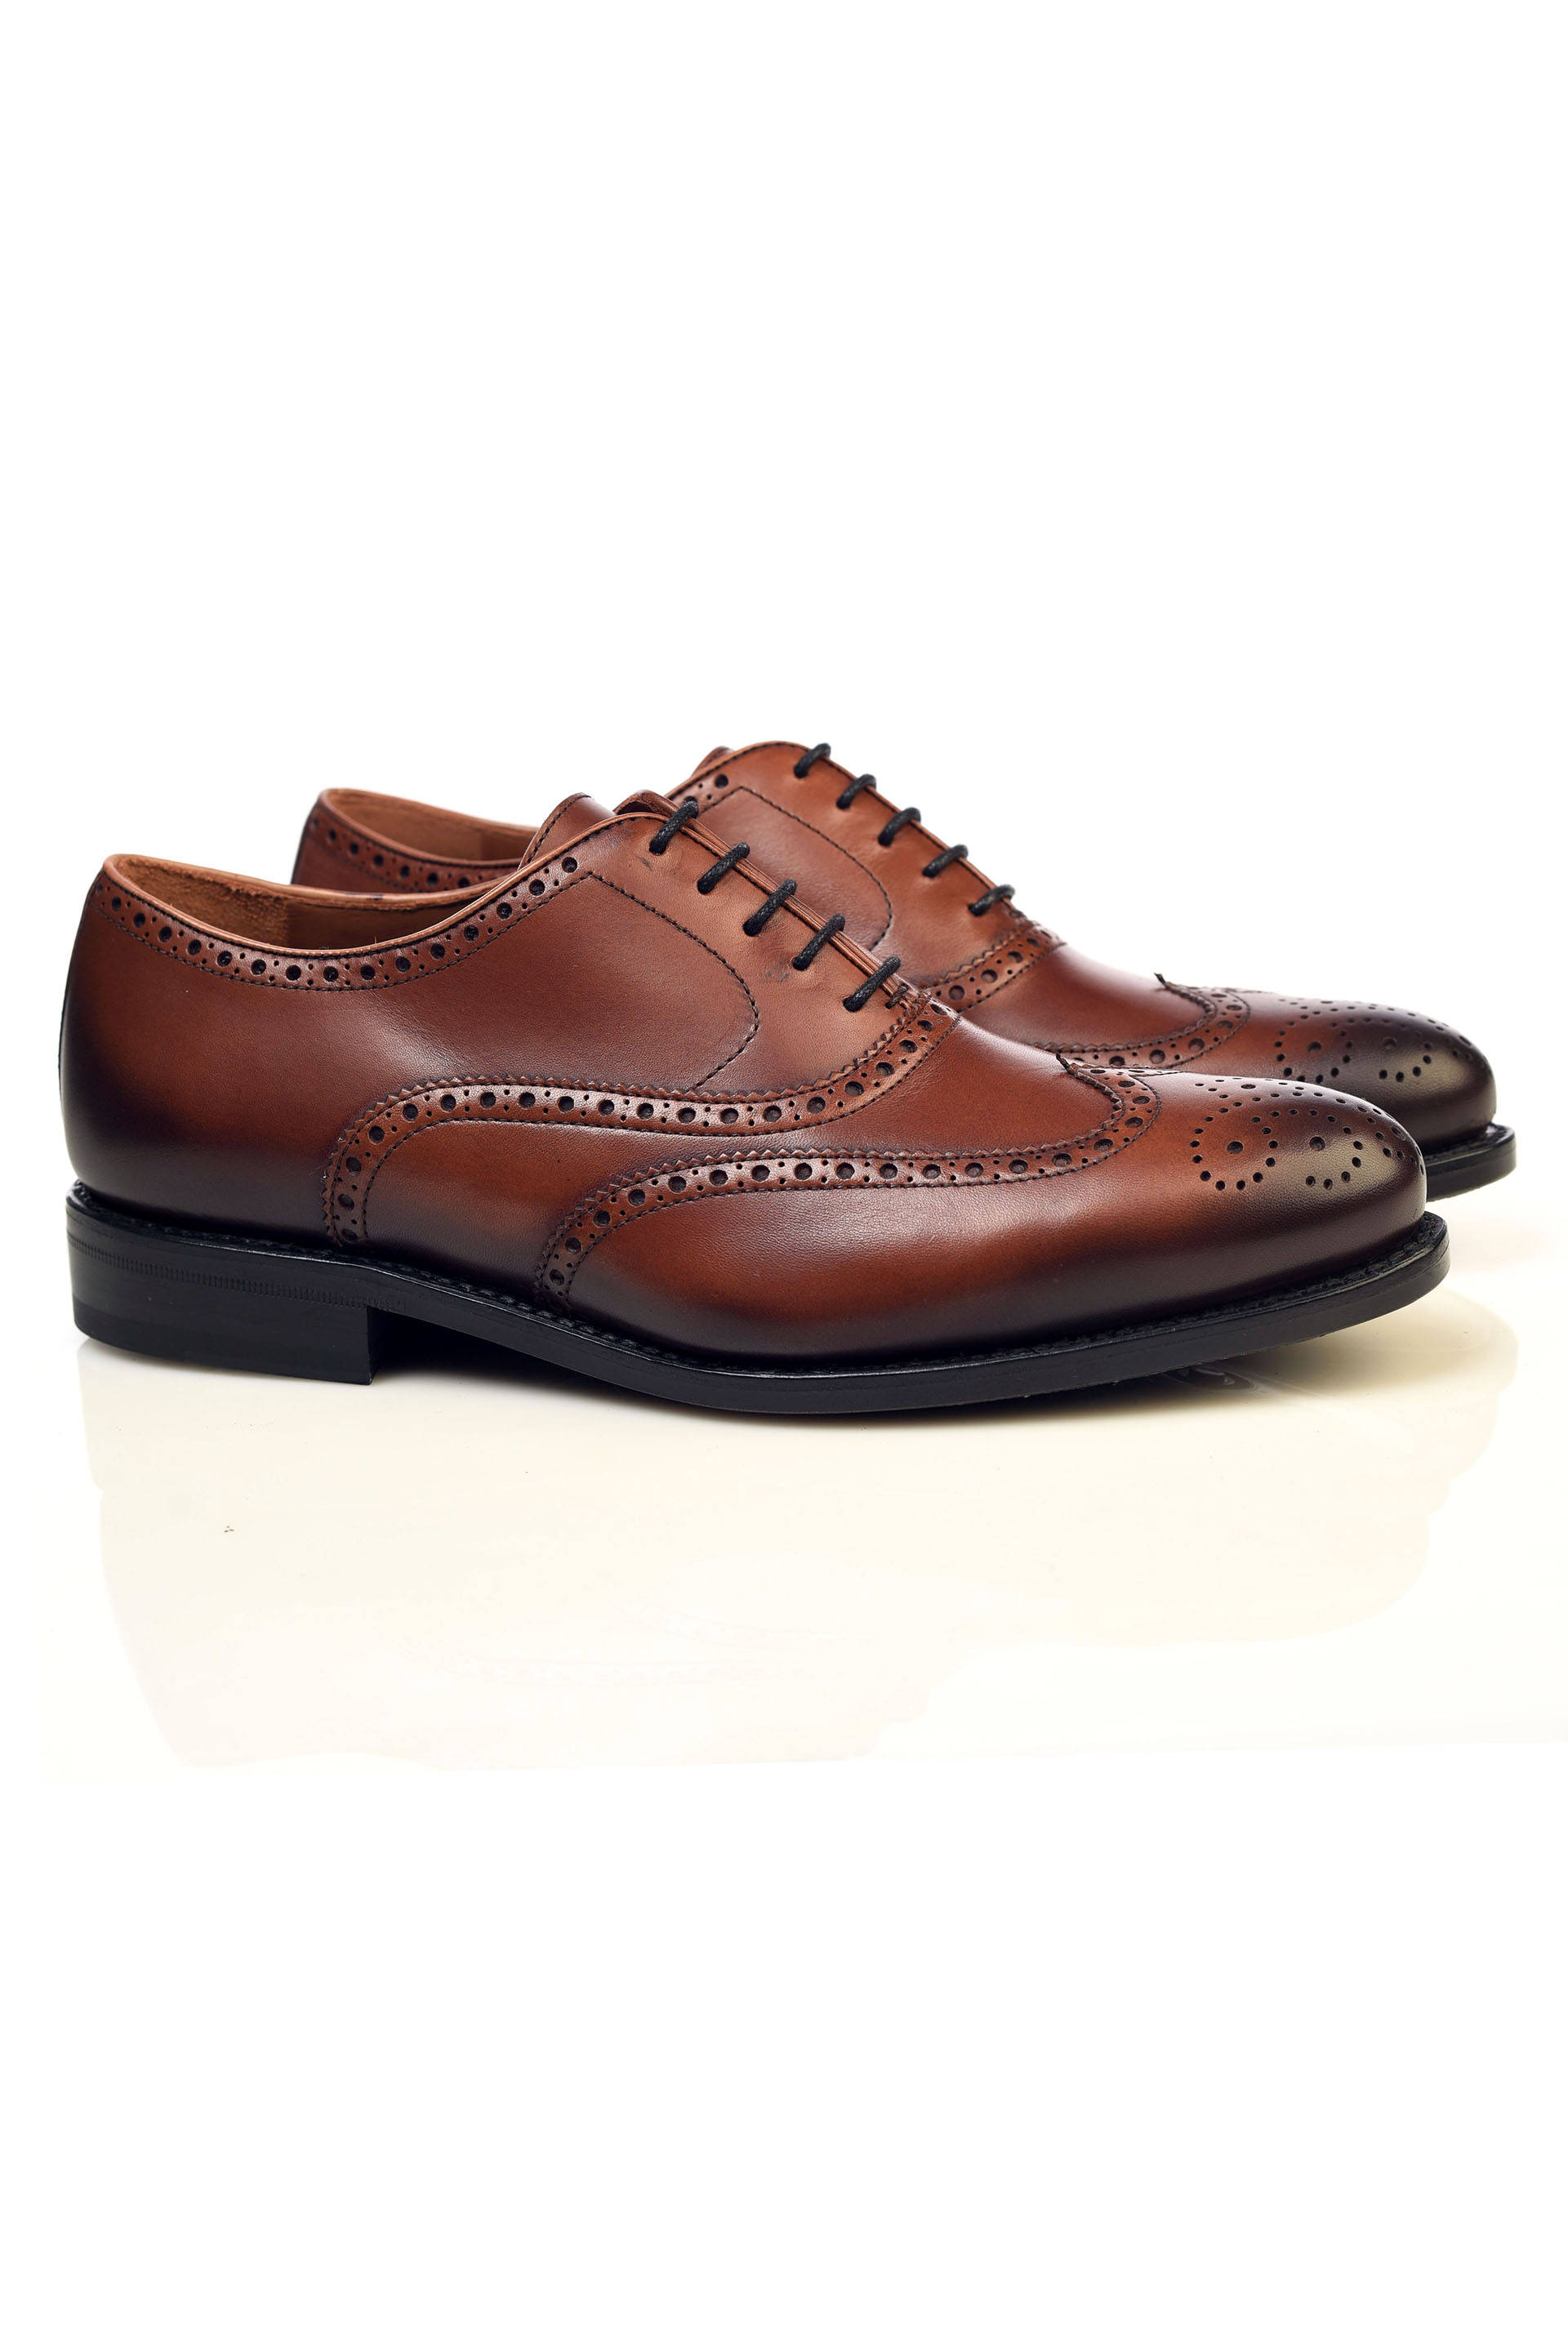 Dominant Lodging Requirements Pantofi Oxford Brodati | Tudor Tailor